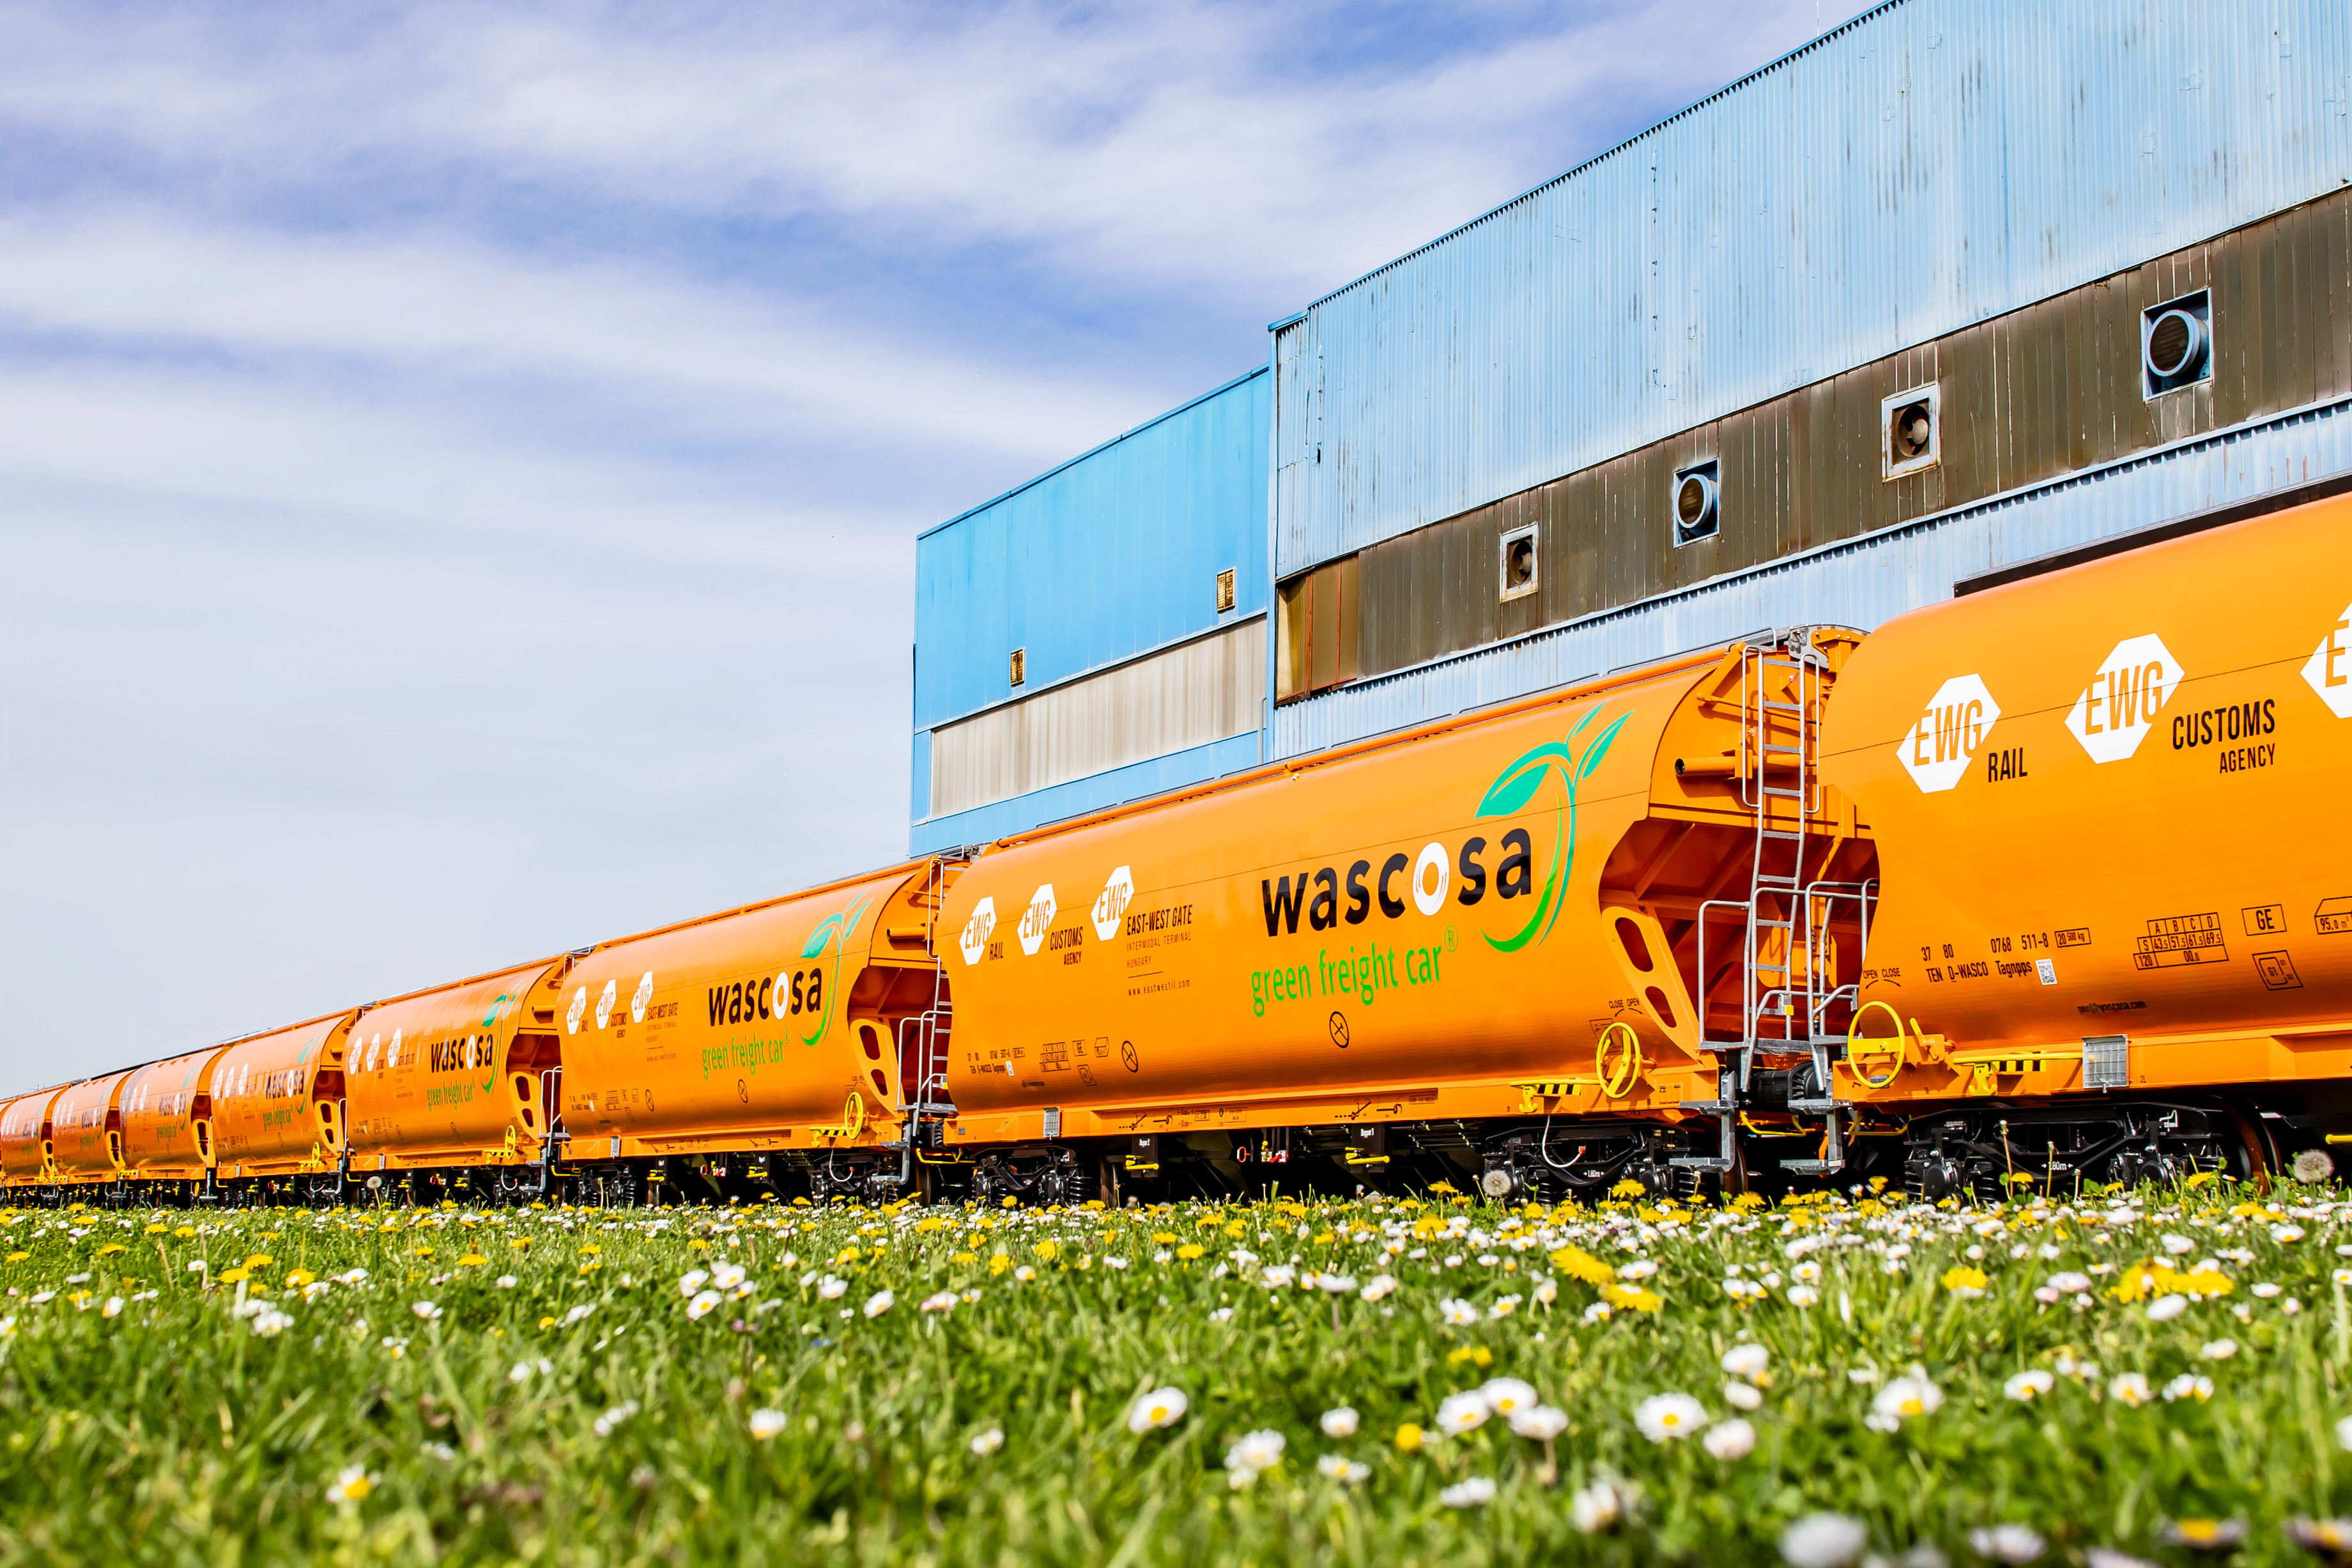 Wascosa lanciert green freight car® 